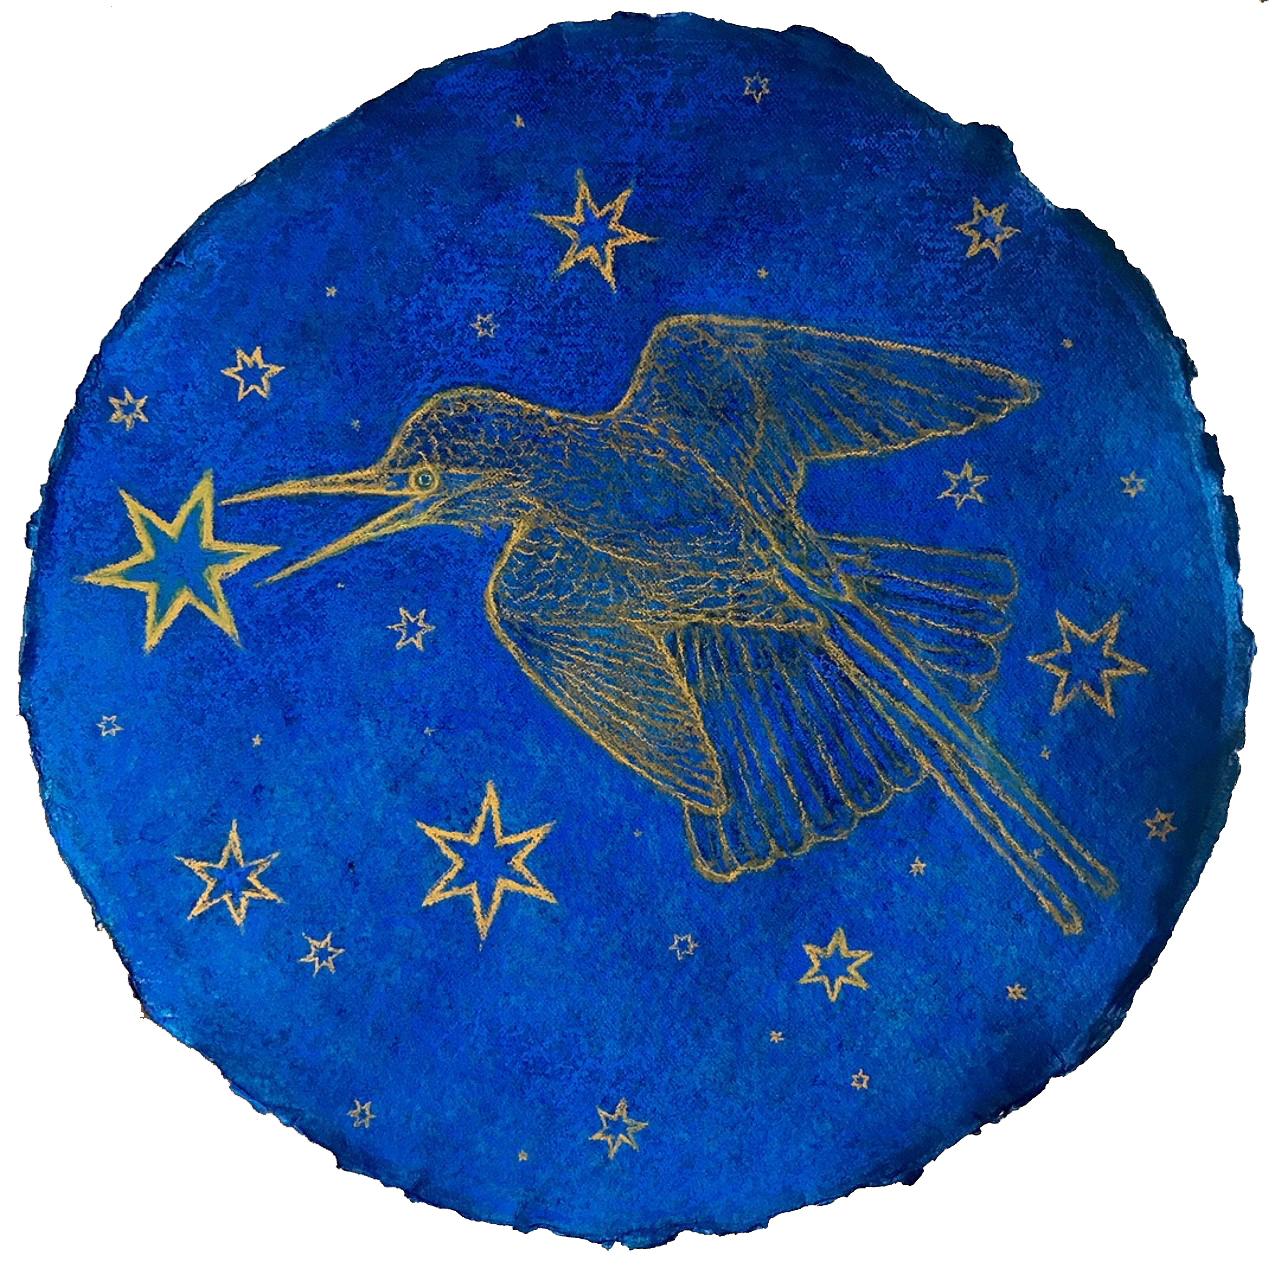 Nicholas Kahn & Richard Selesnick Animal Painting - Hummingbird Augury: Cobalt Blue Pastel Drawing on Handmade Paper w/ Gold Stars